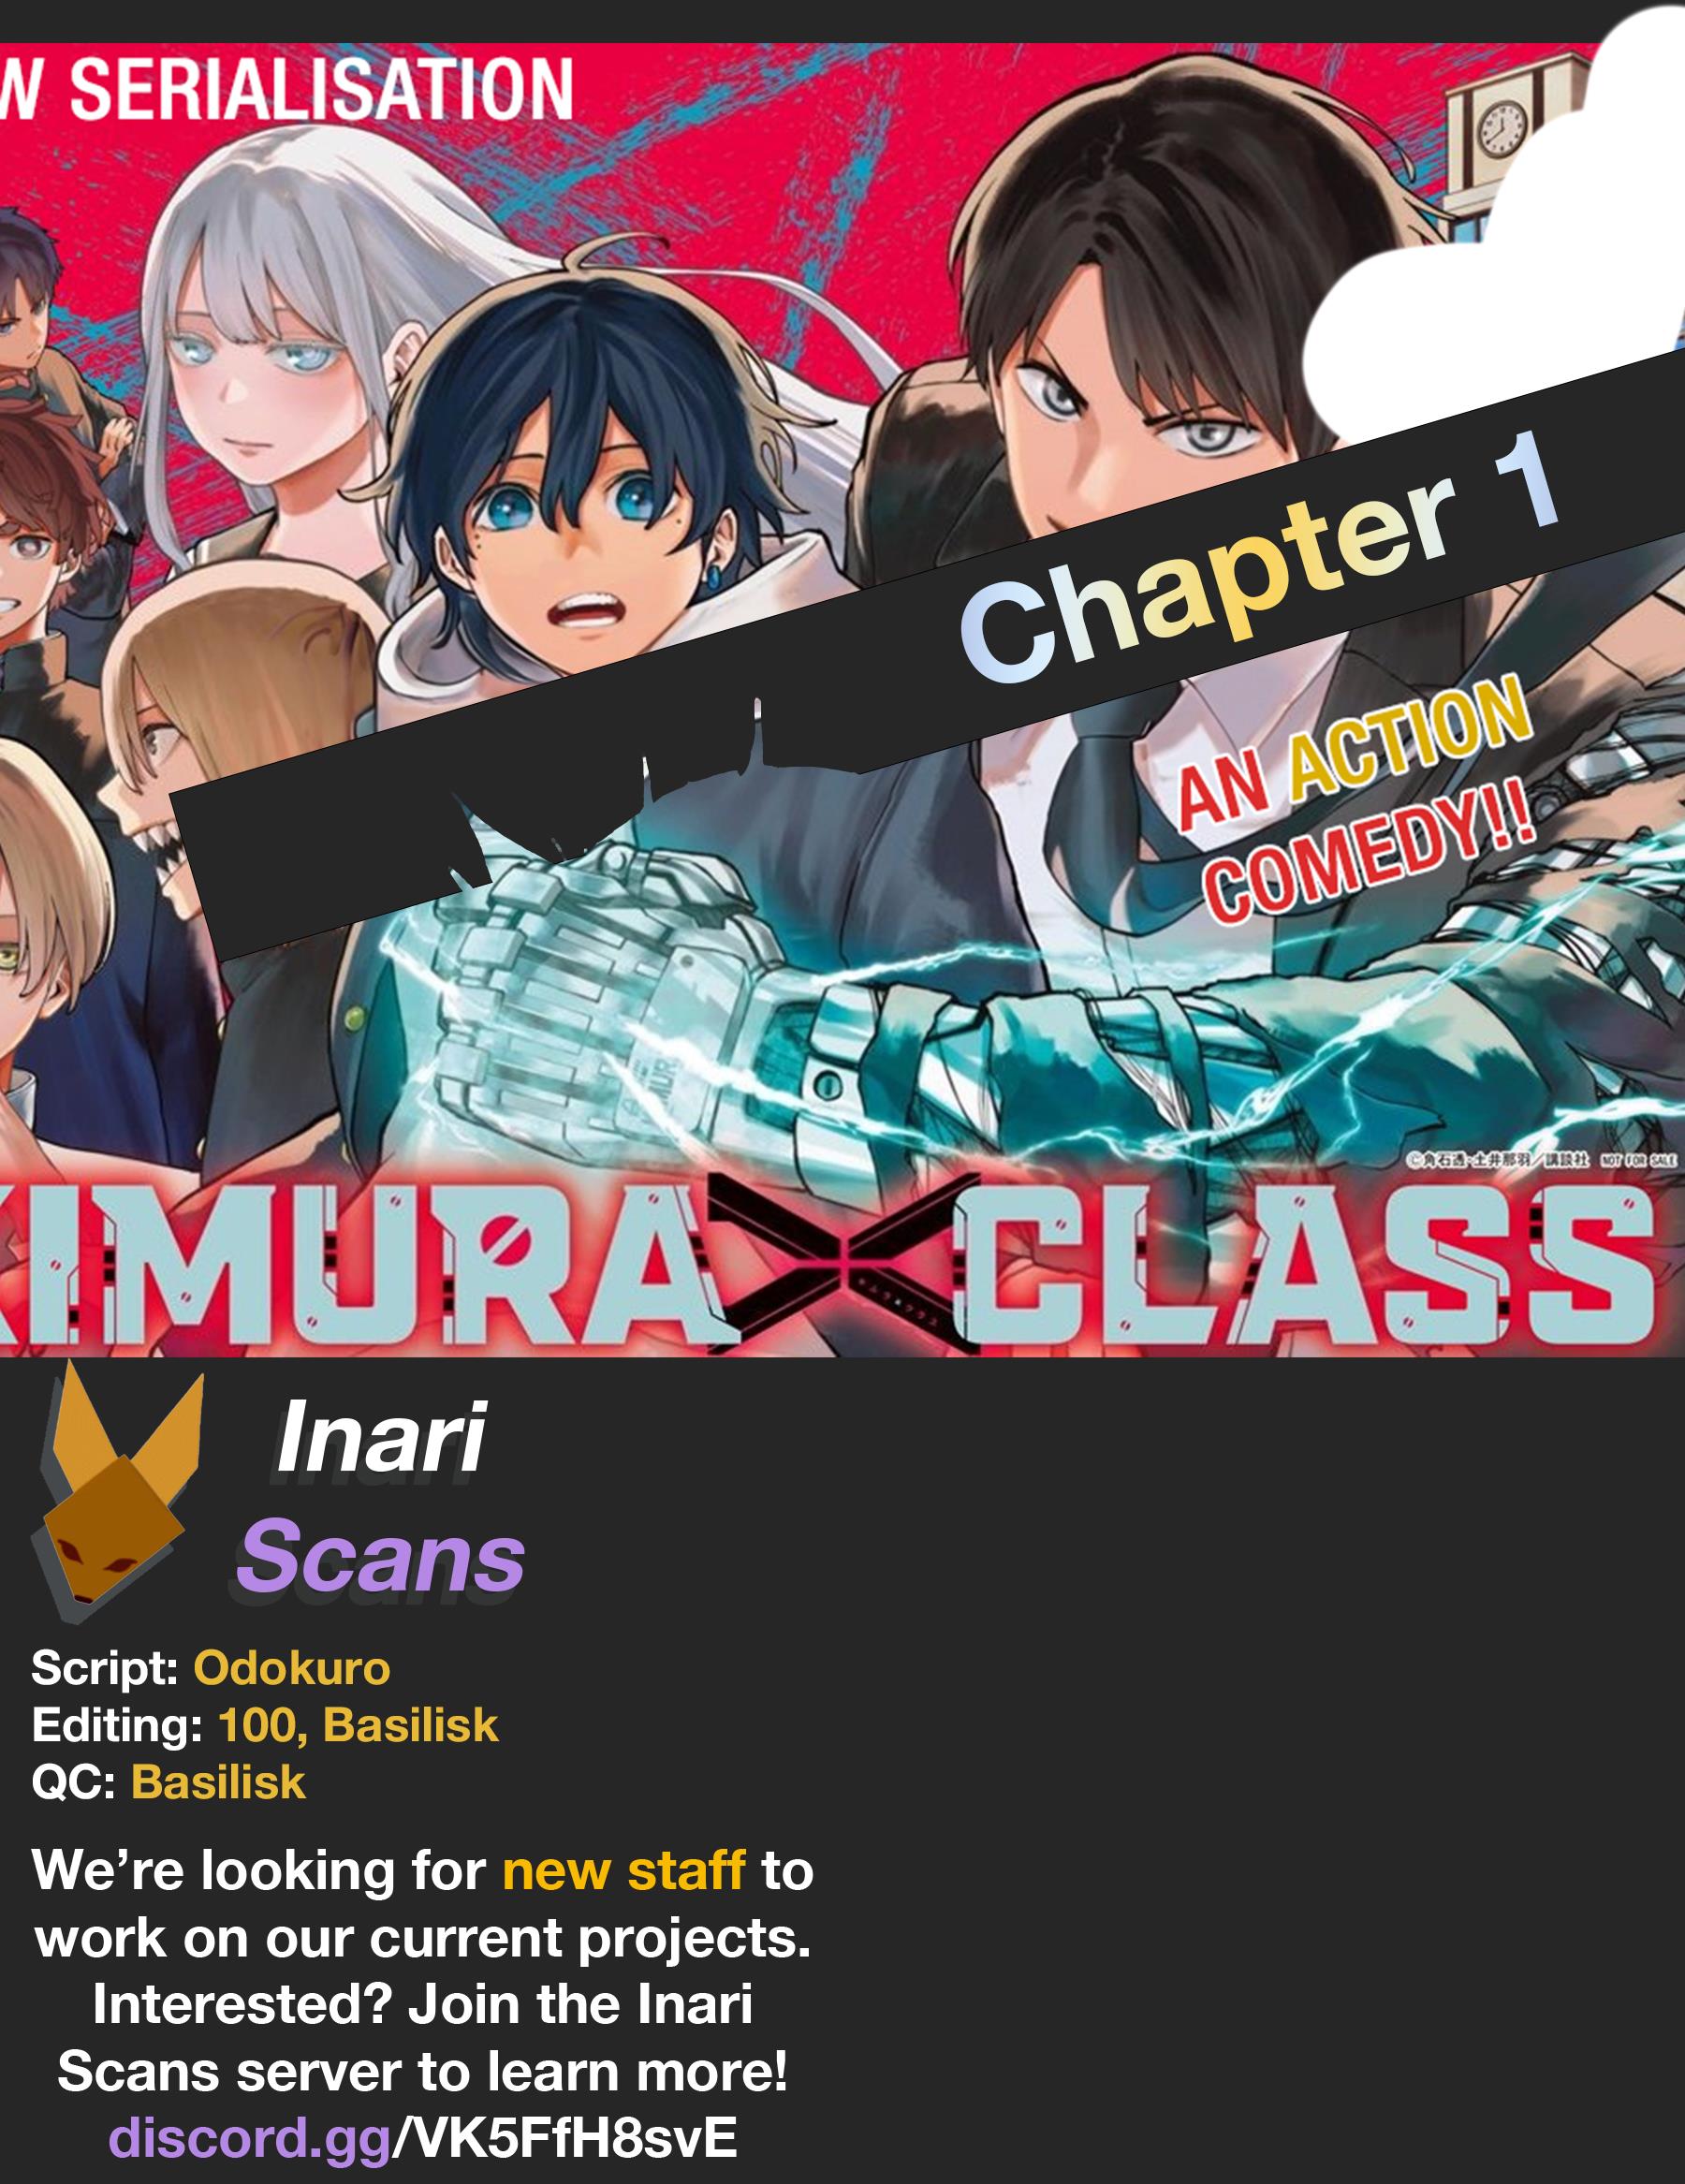 Kimura X Class - Page 2